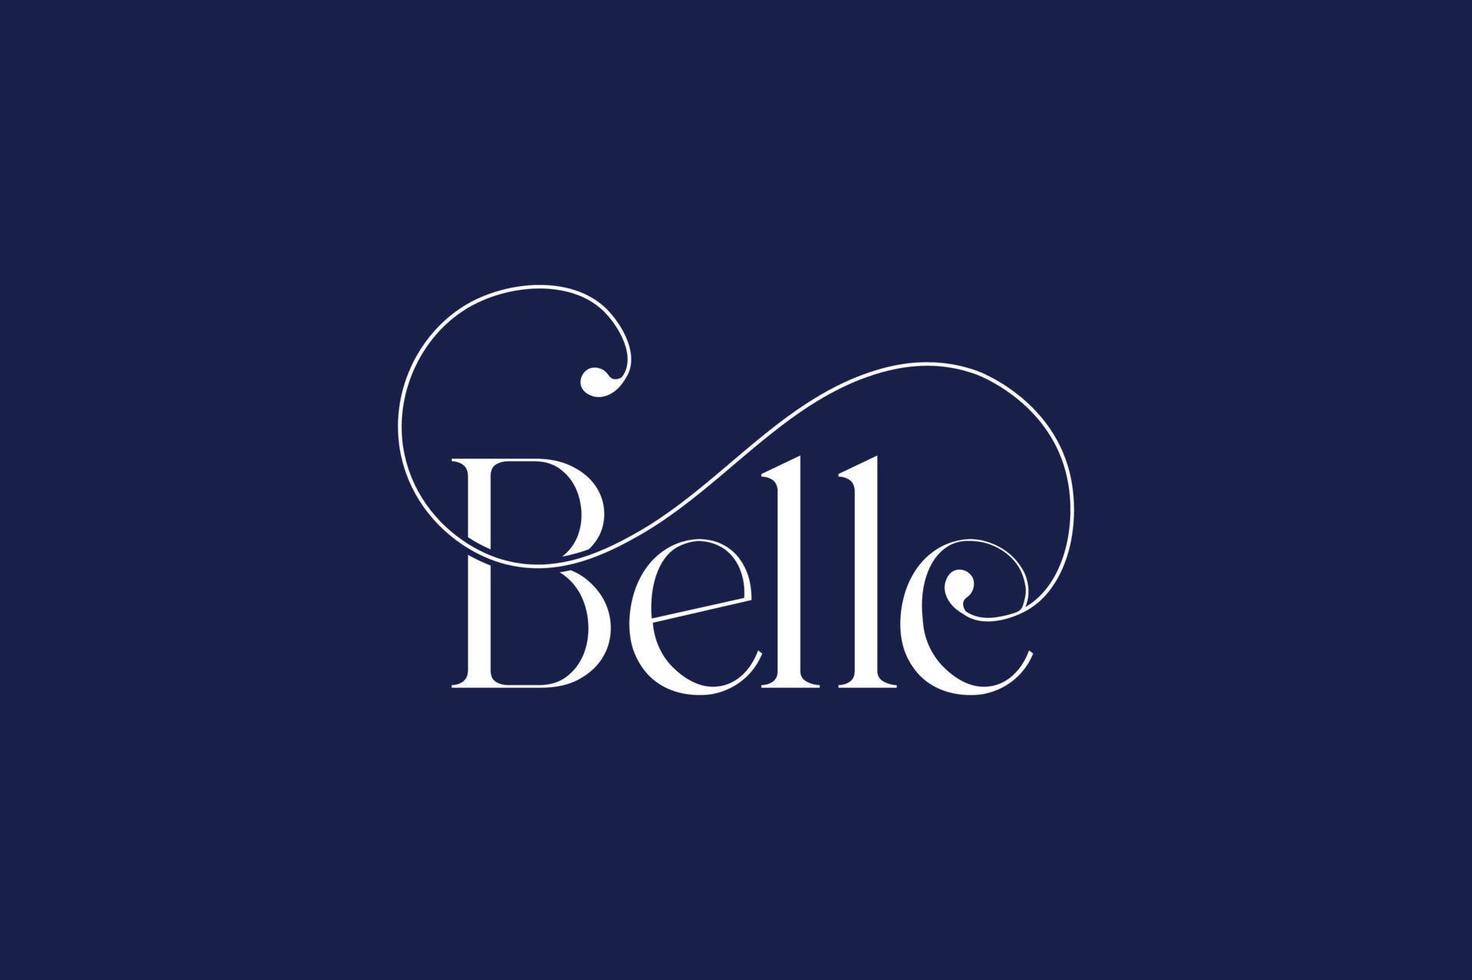 belle logo, beauty brand logo, ligature logo design, fashion logo vector